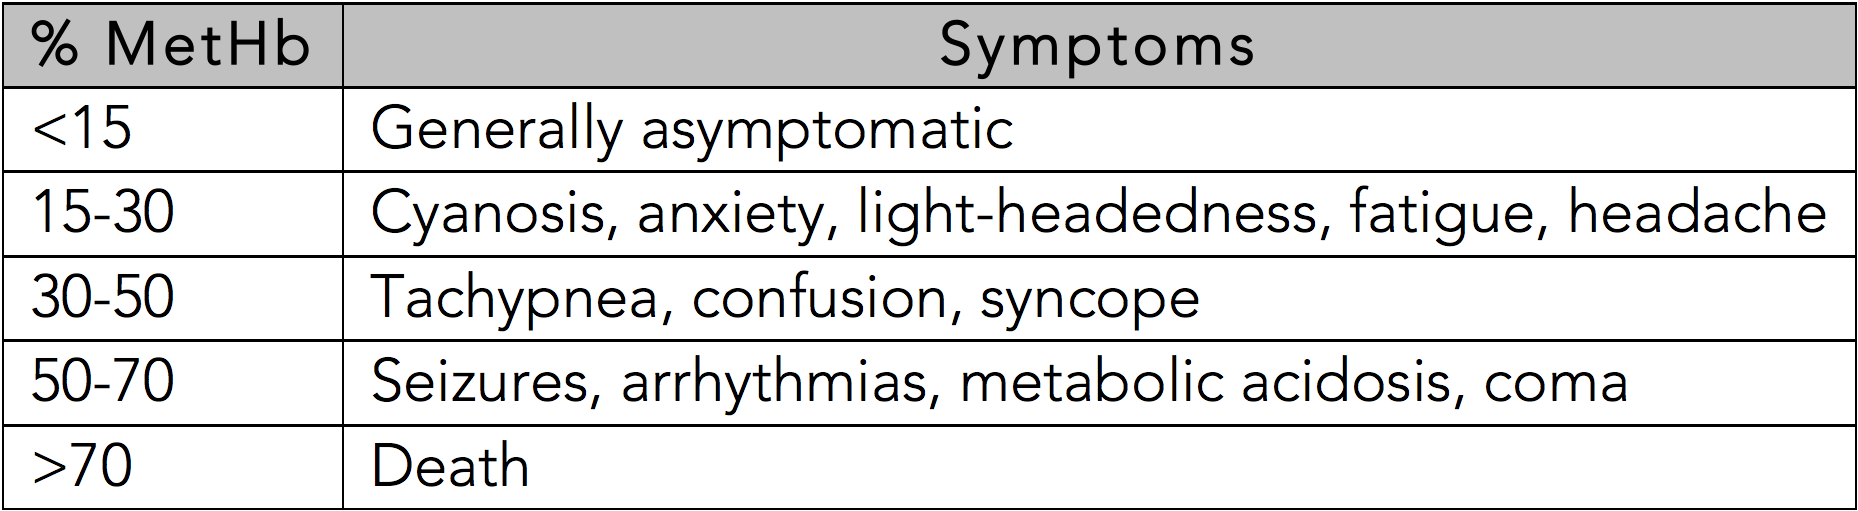 Table 1: Symptoms Based on Methemoglobin Level